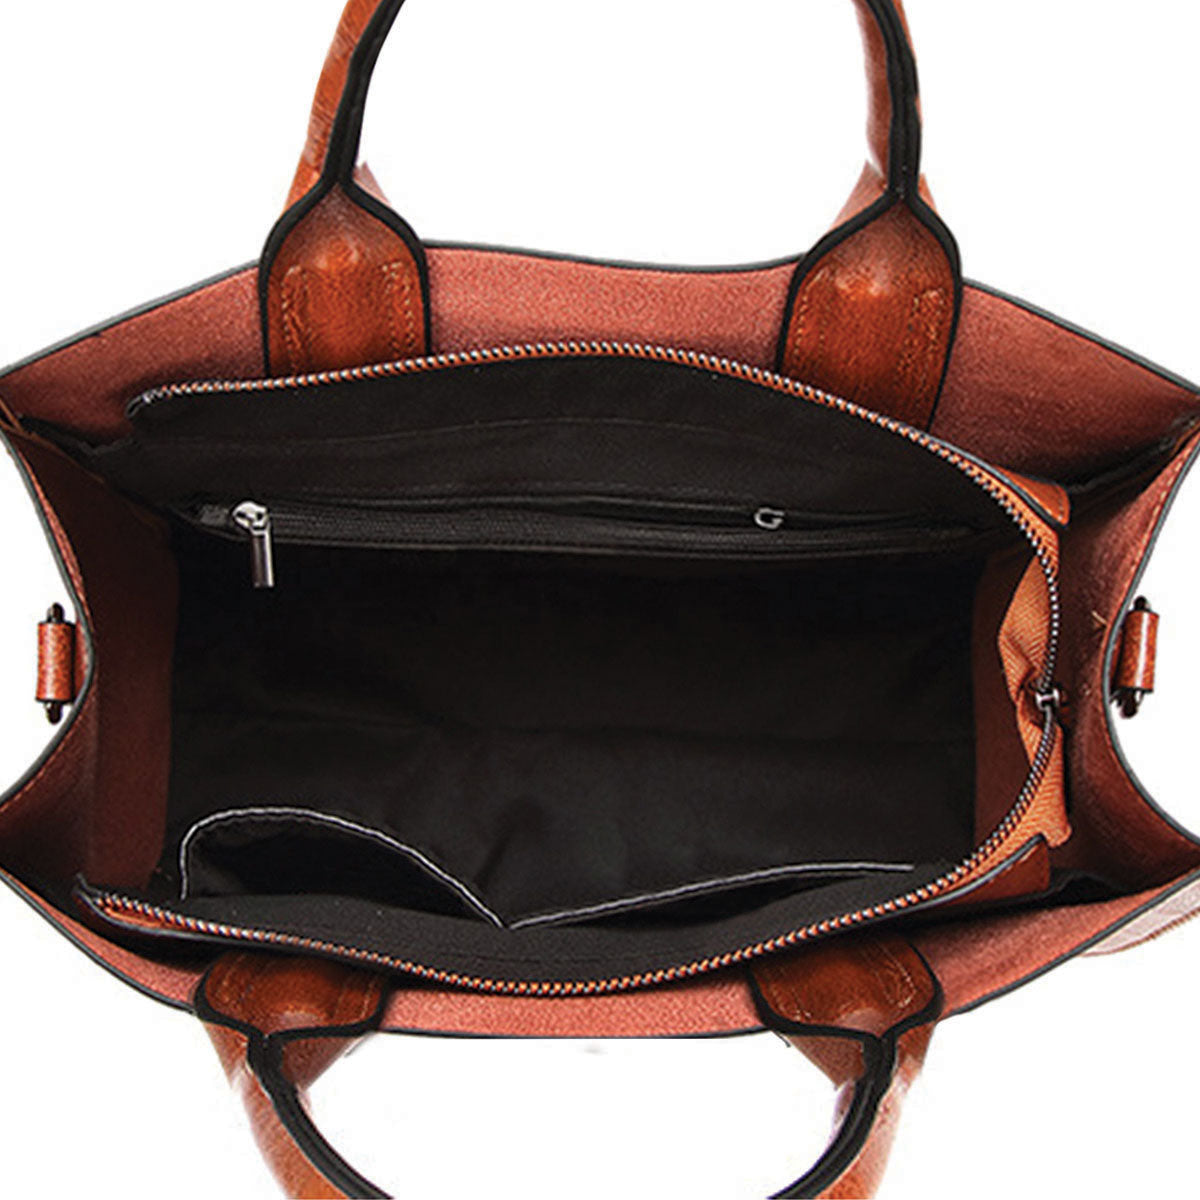 Your Best Companion - Poodle Luxury Handbag V2